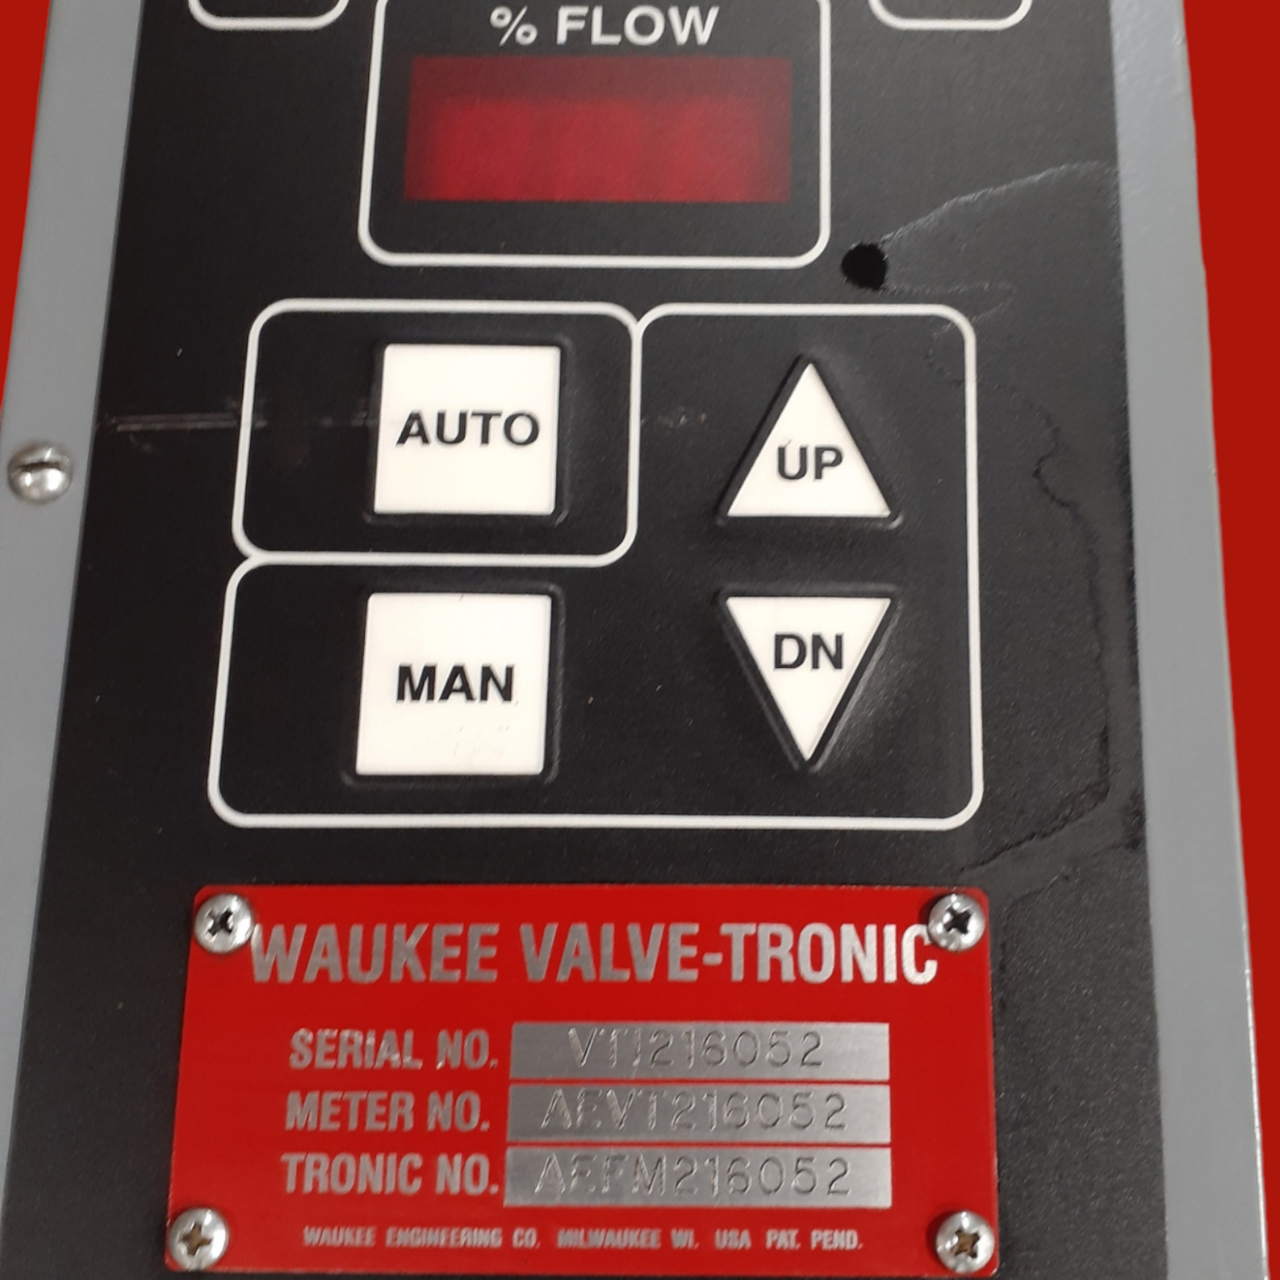 Waukee Valve-Tronic Electronic CFH 0-350 Natural Gas Flow Meter, MPX-8VT